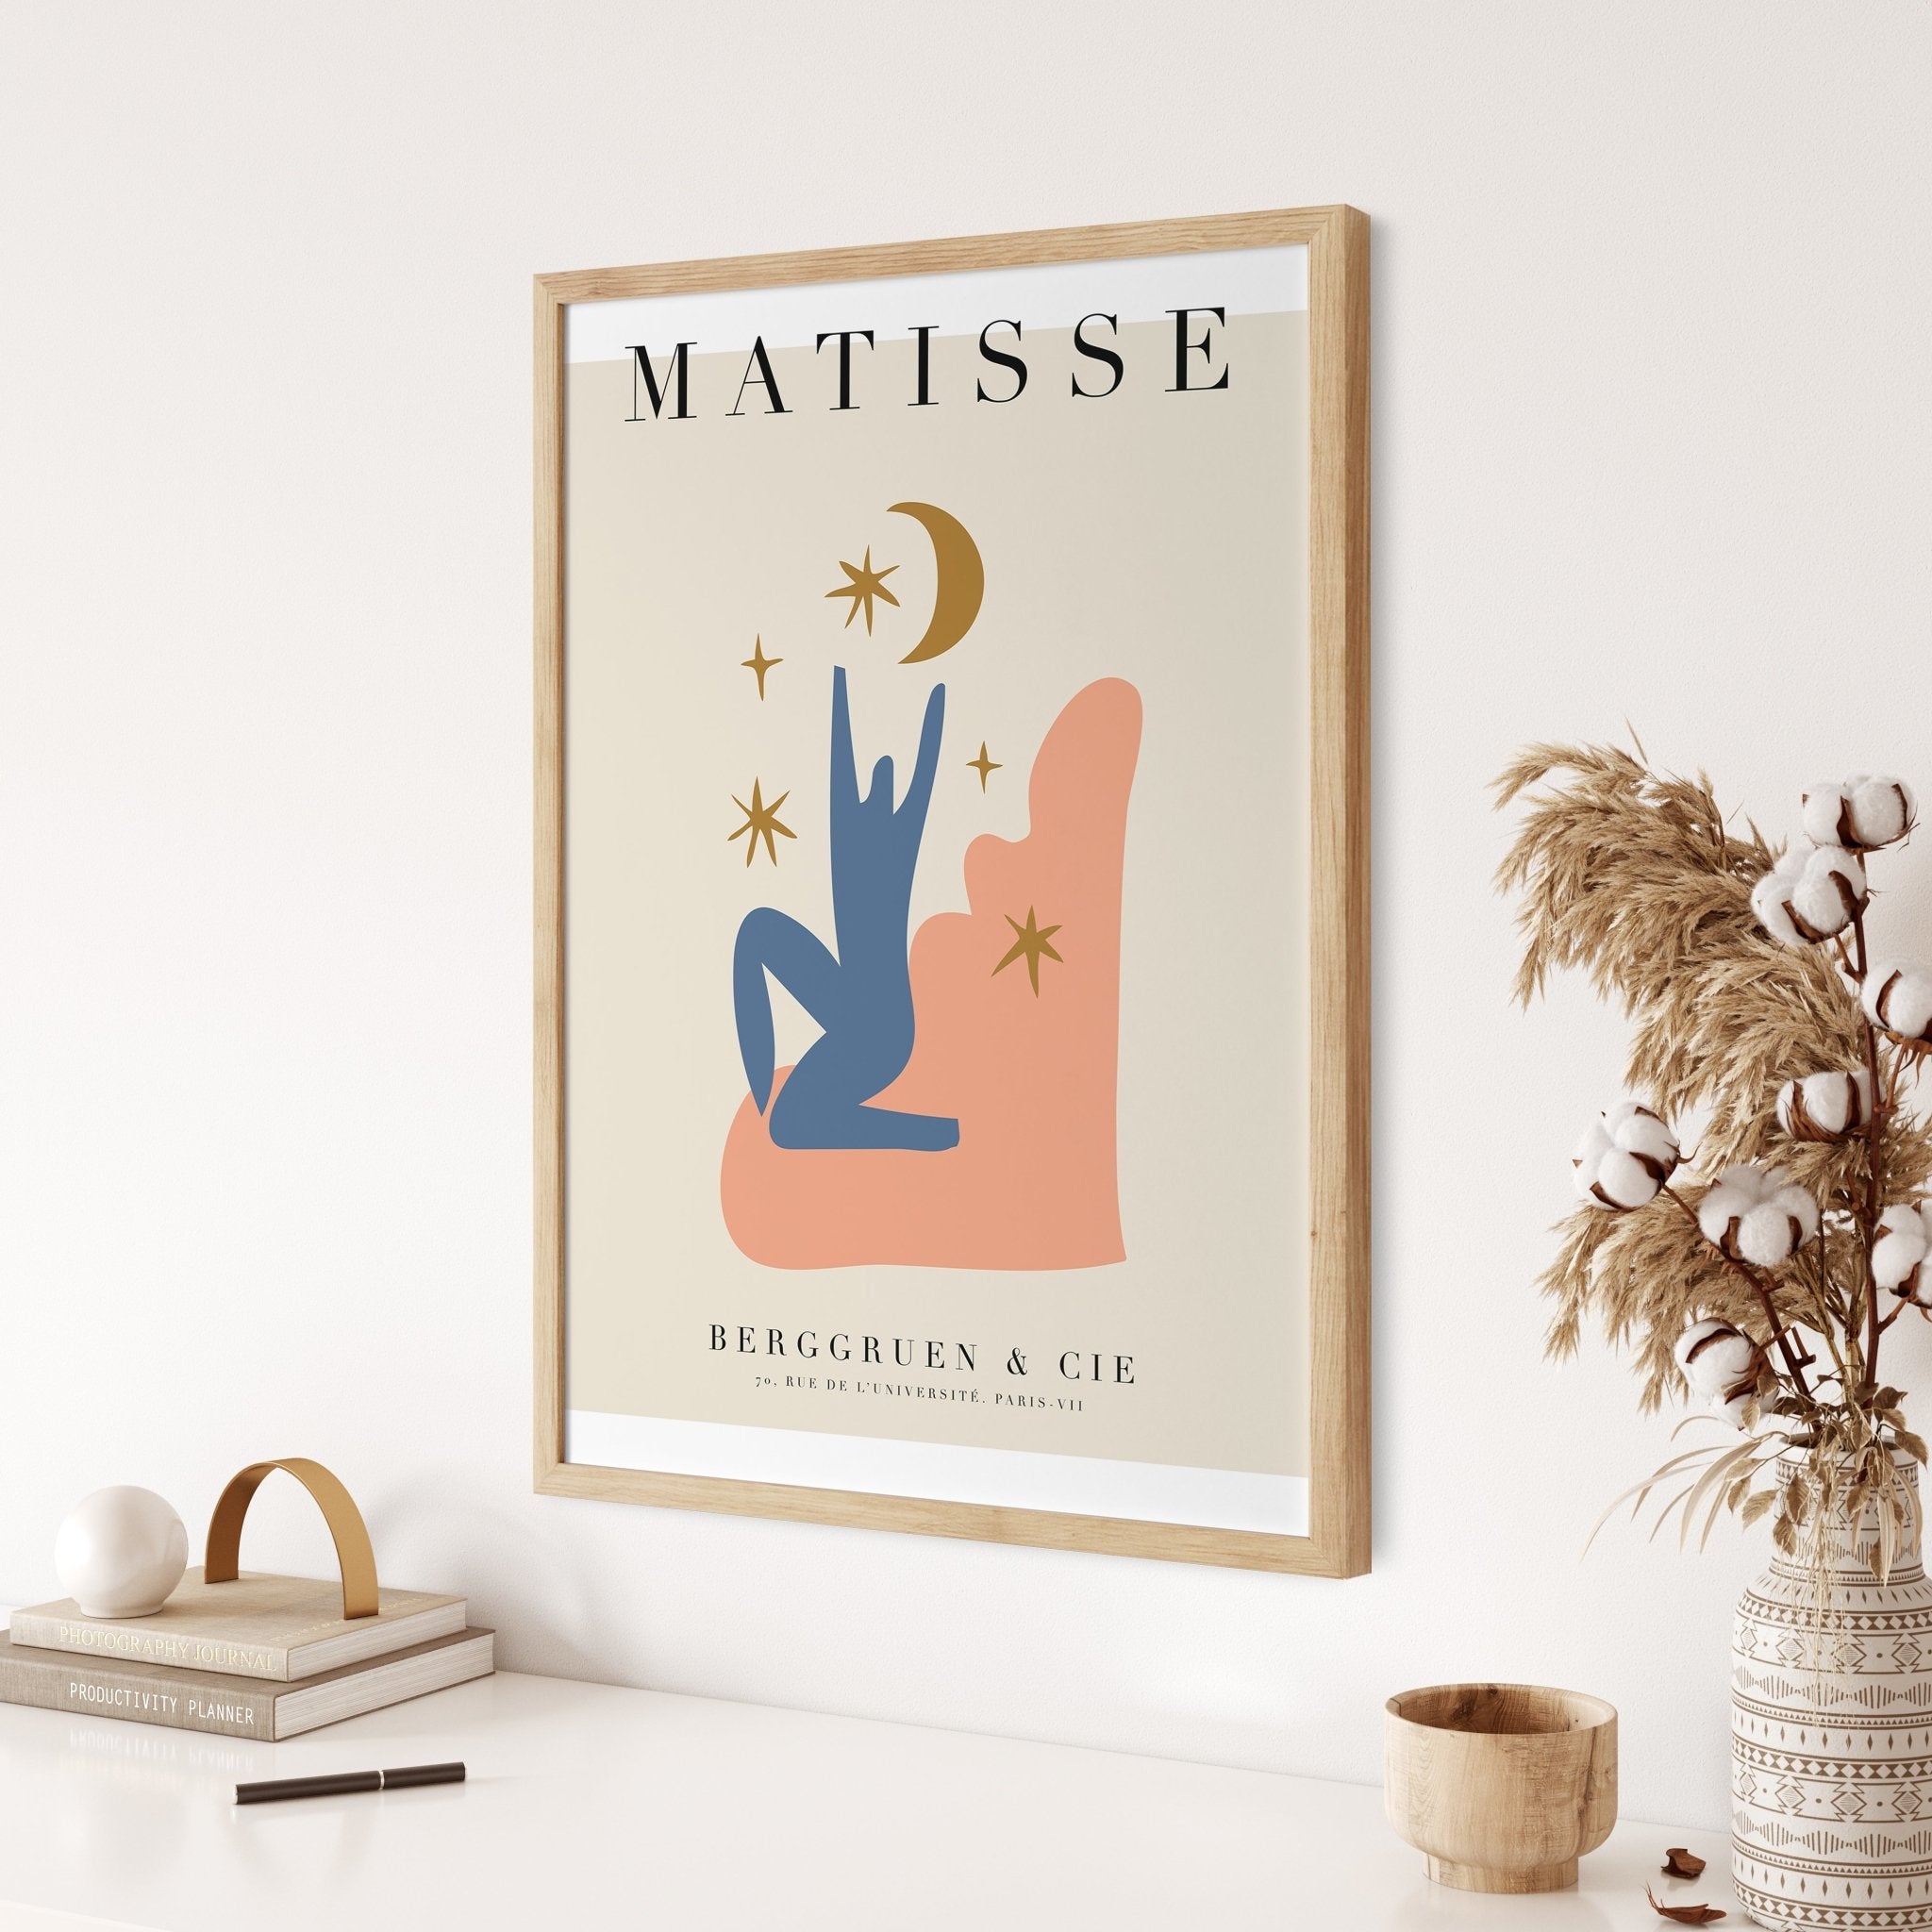 Matisse Berggruen & Cie